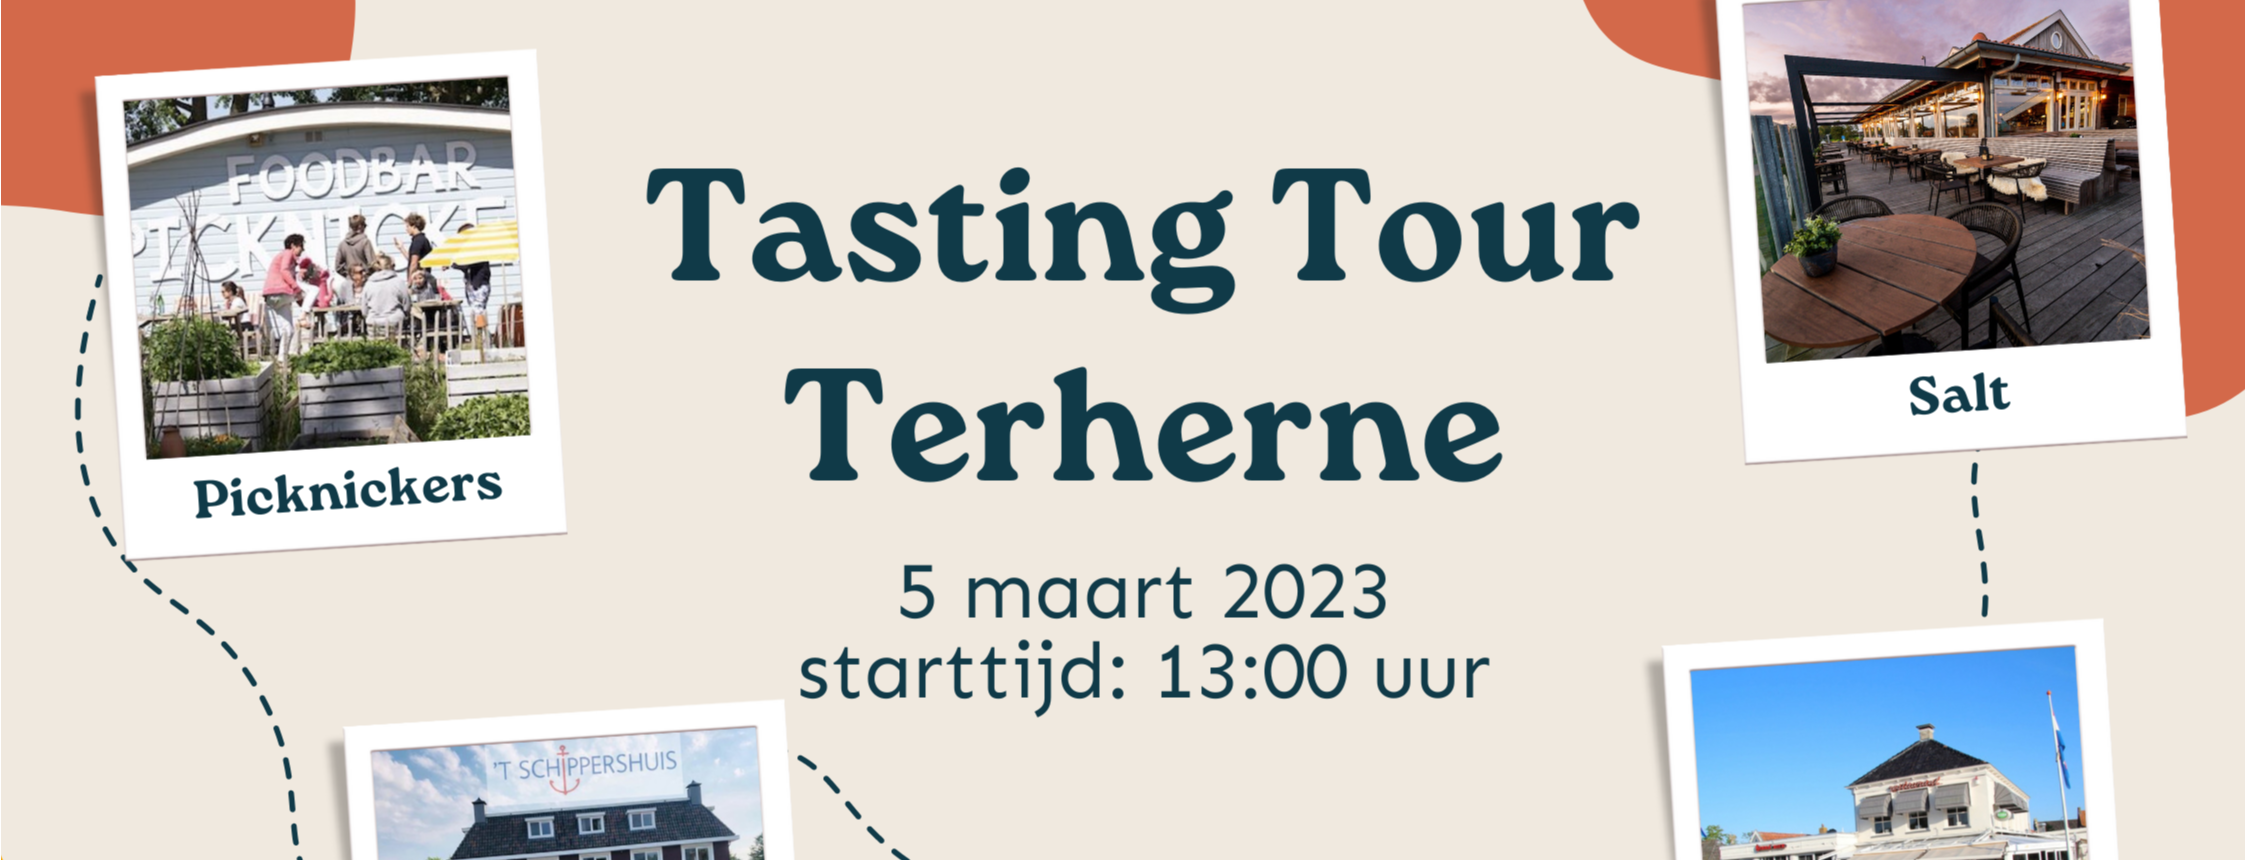 Tasting Tour Terherne